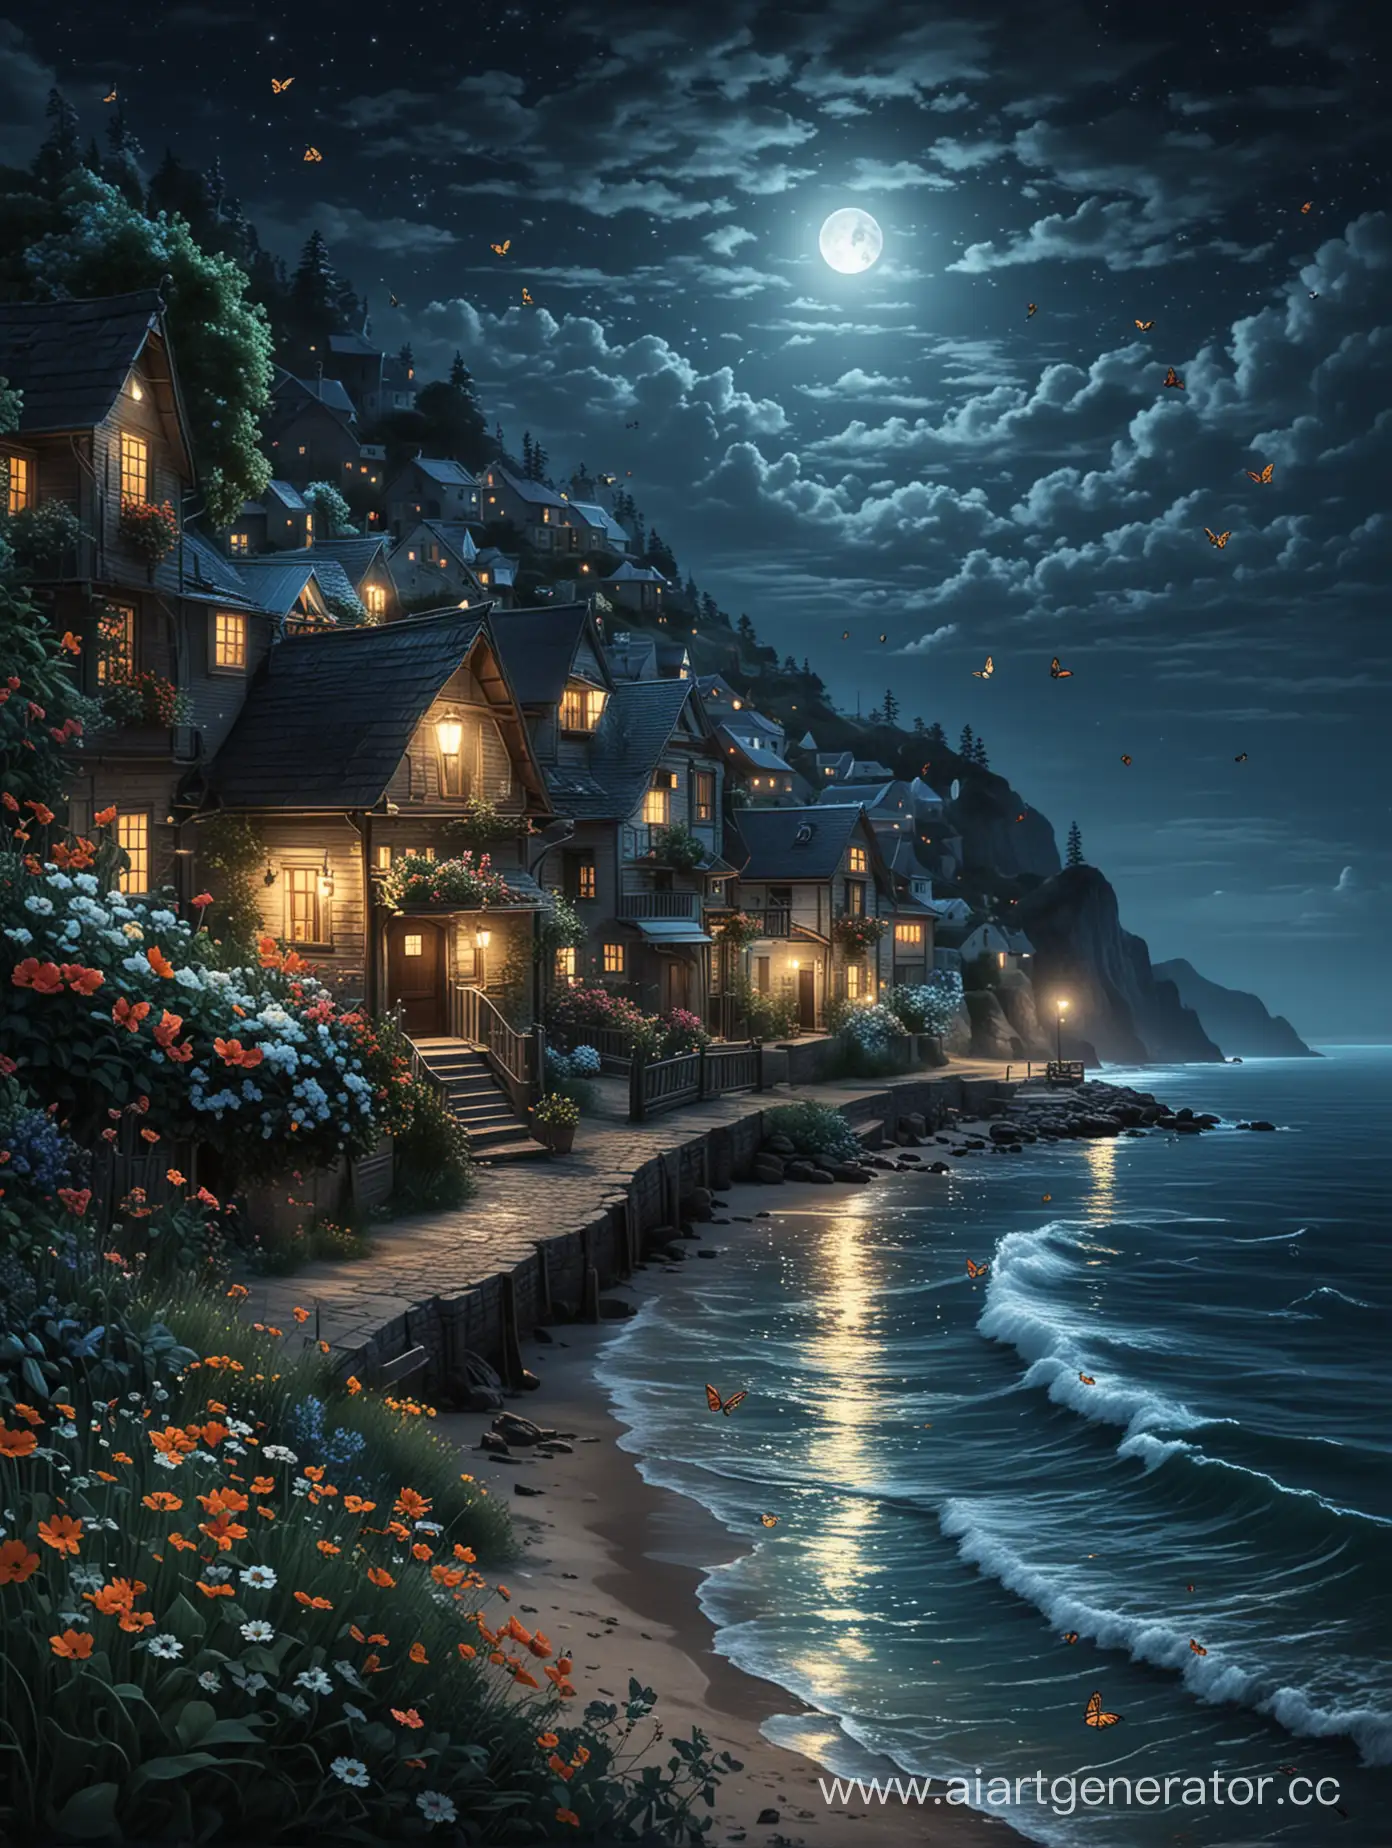 Moonlit-Night-in-a-Serene-Seaside-Town-with-Fluttering-Butterflies